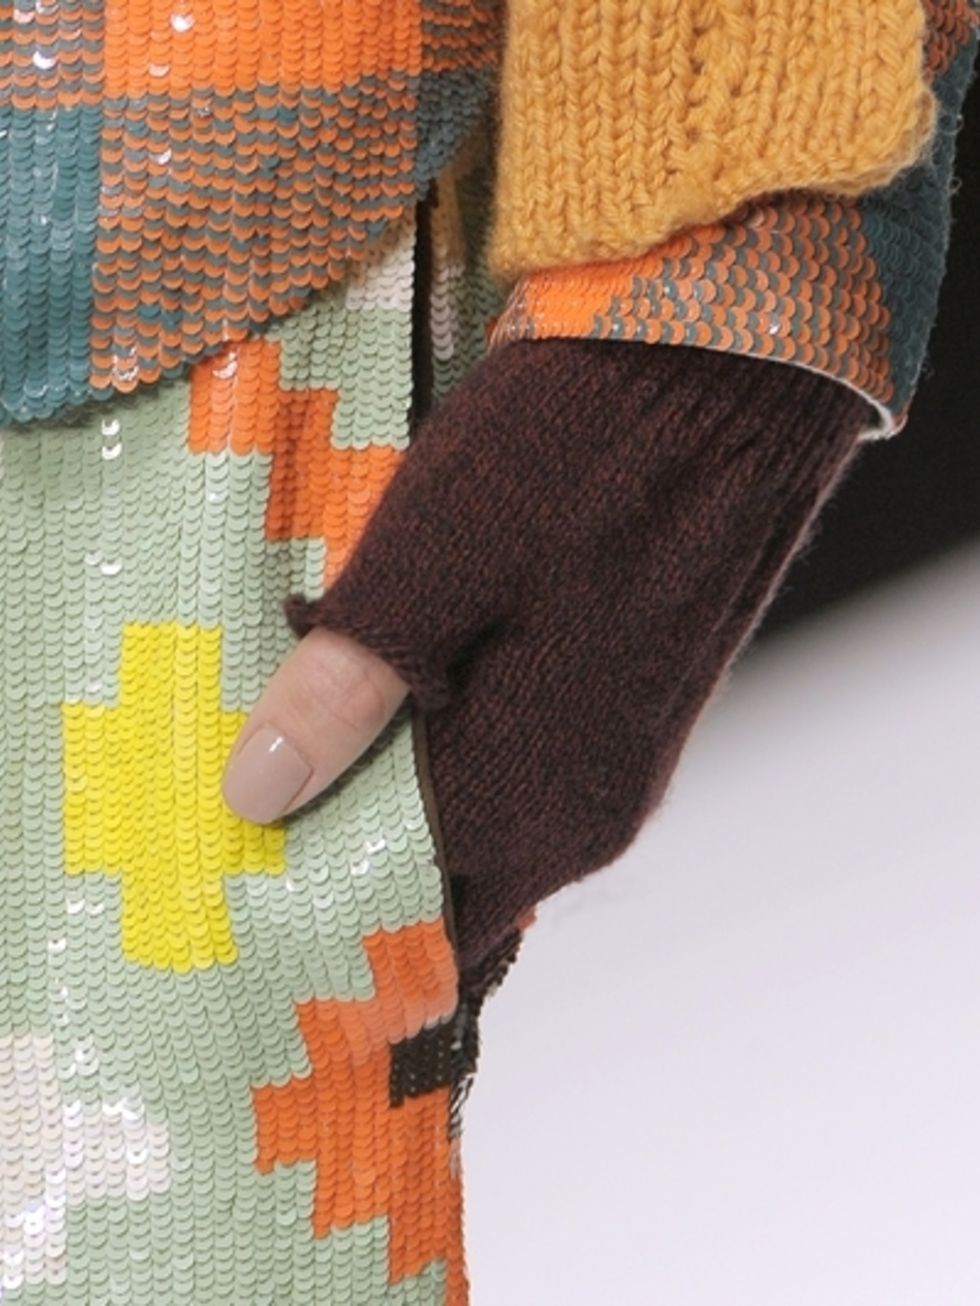 Pattern, Textile, Human leg, Orange, Woolen, Wool, Knitting, Creative arts, Craft, Thread, 